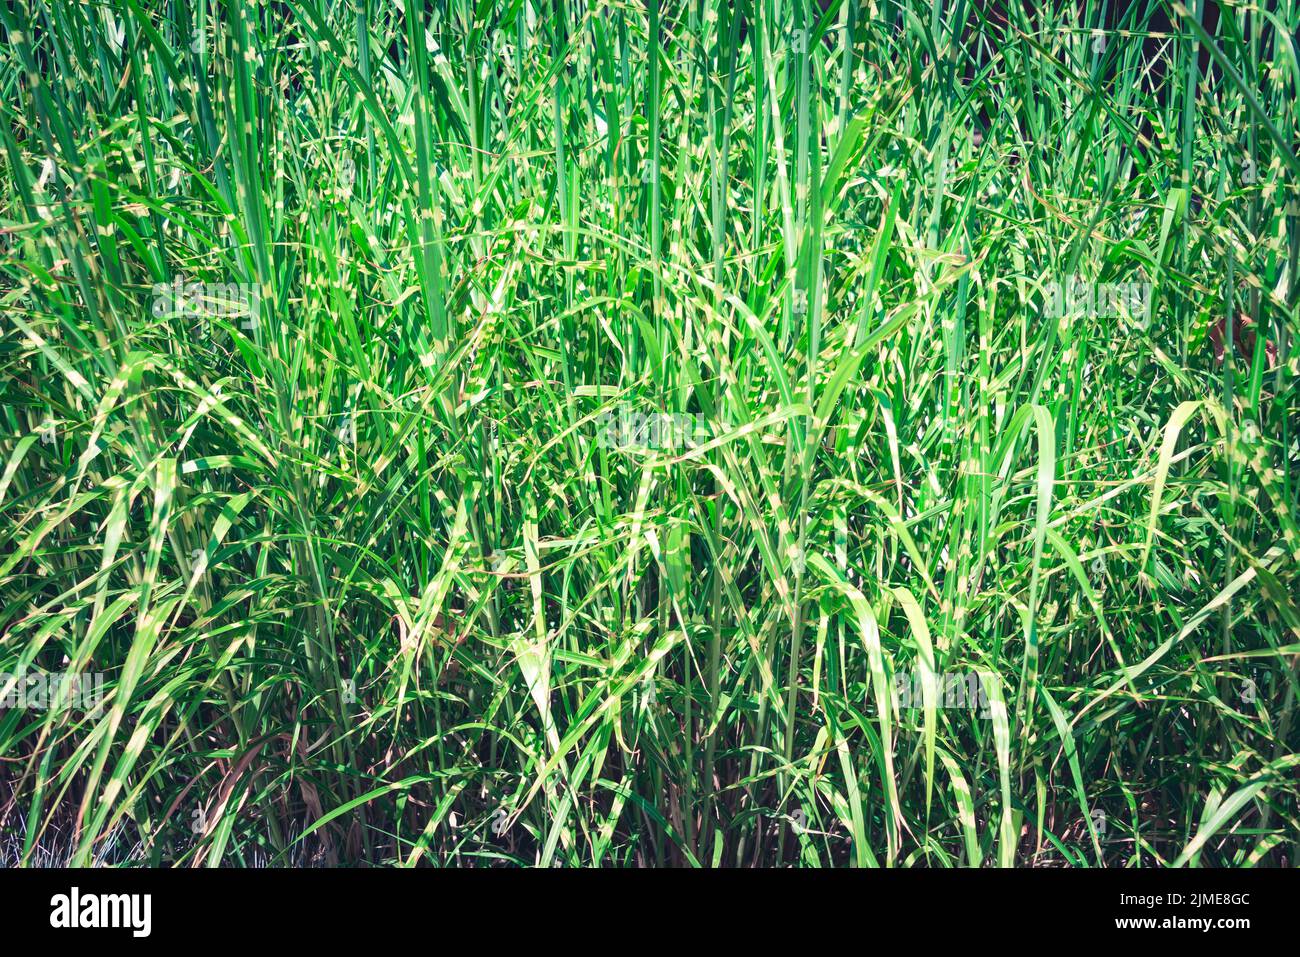 Green grass texture background. Stock Photo